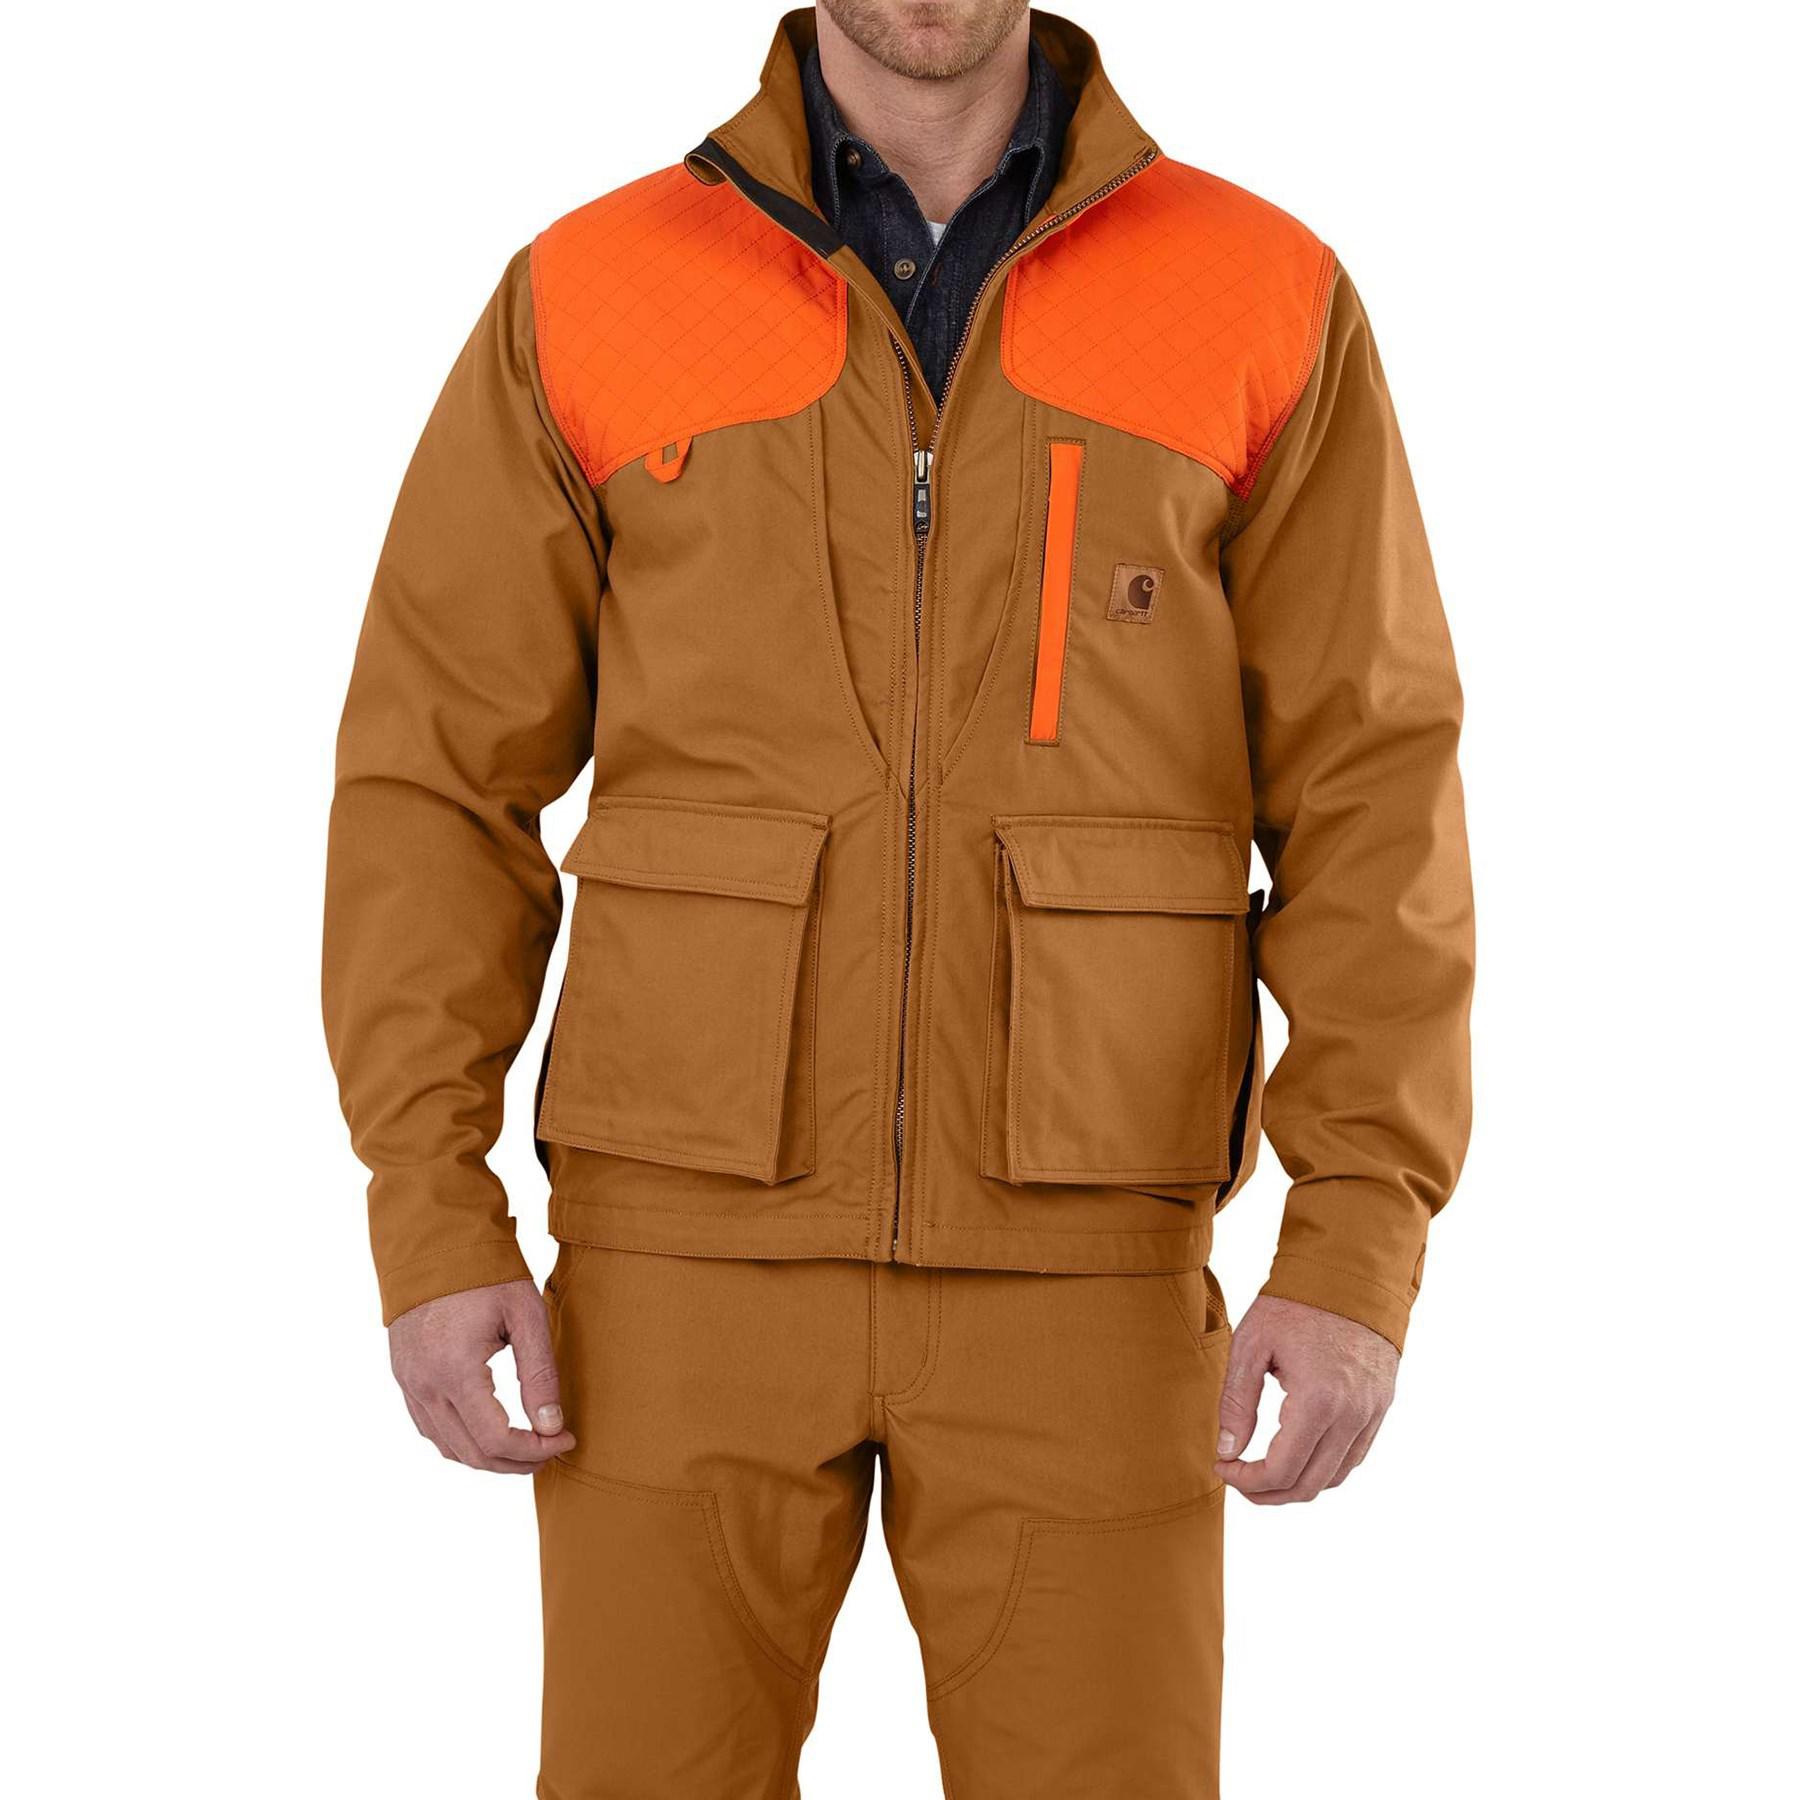 Carhartt Upland Field Jacket in Brown for Men - Lyst